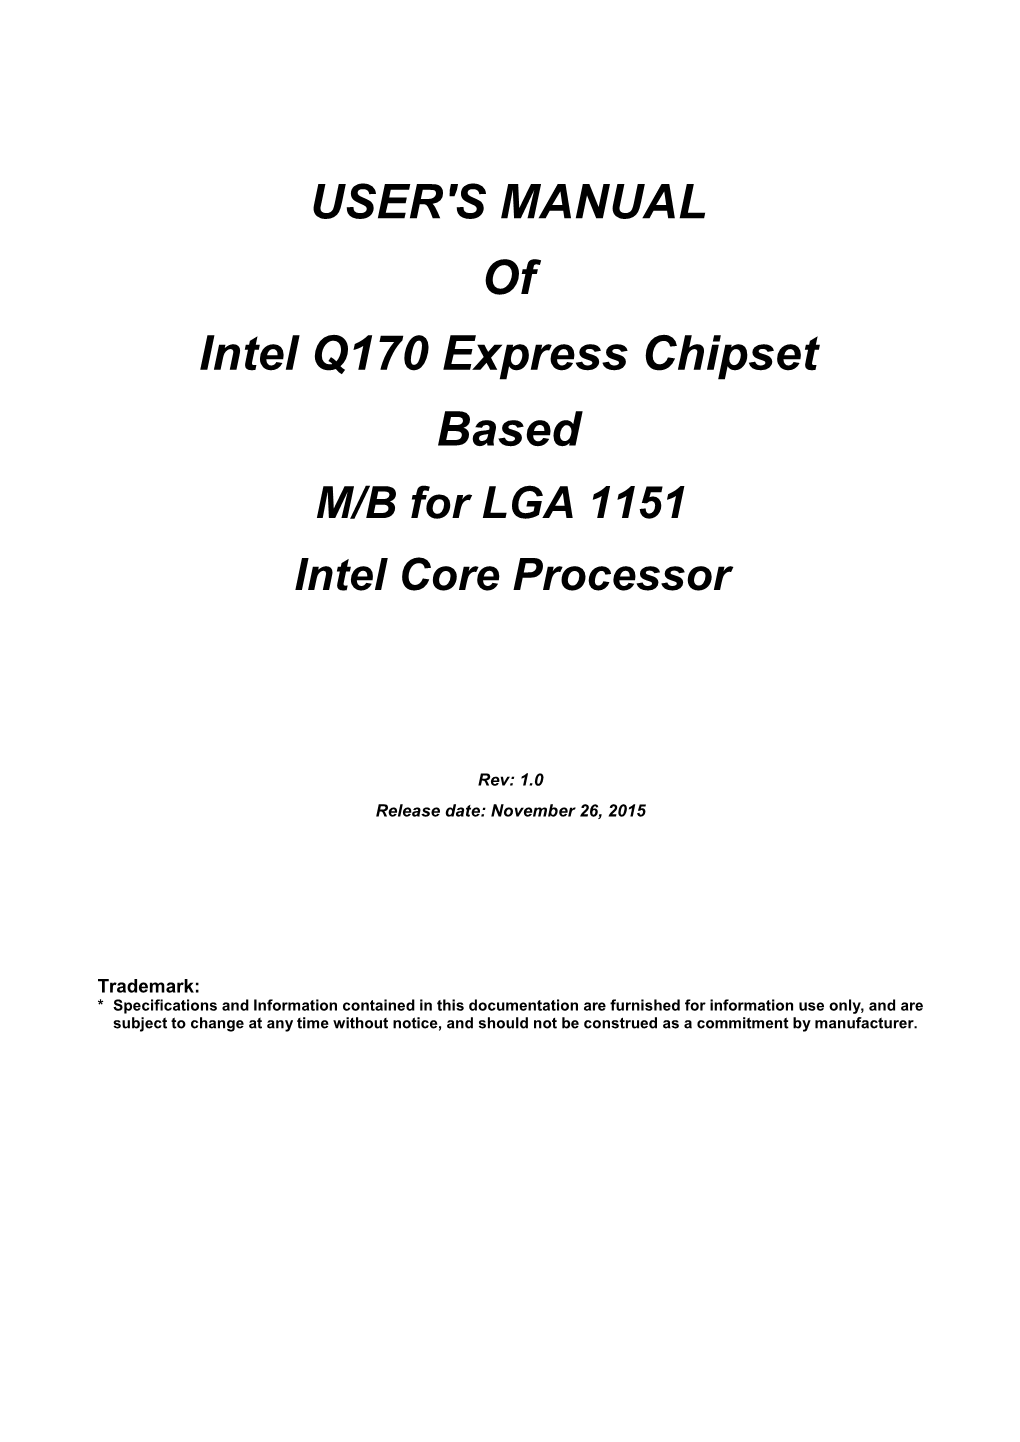 USER's MANUAL of Intel Q170 Express Chipset Based M/B for LGA 1151